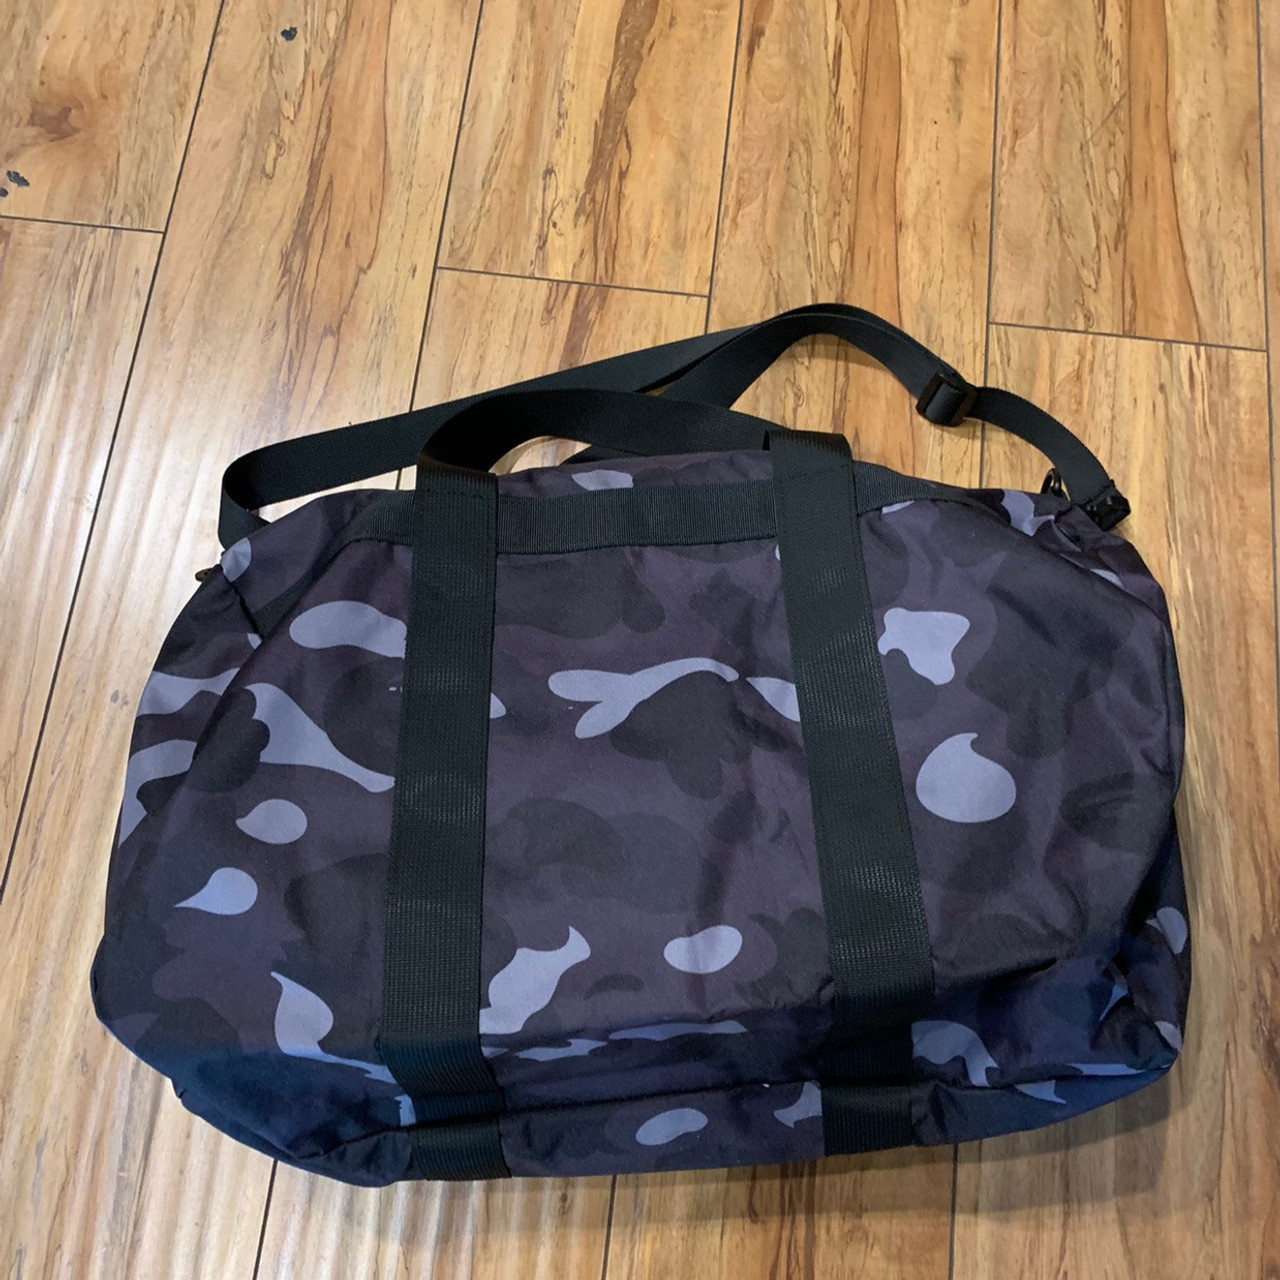 BAPE Duffle Bag Green Camo 2020